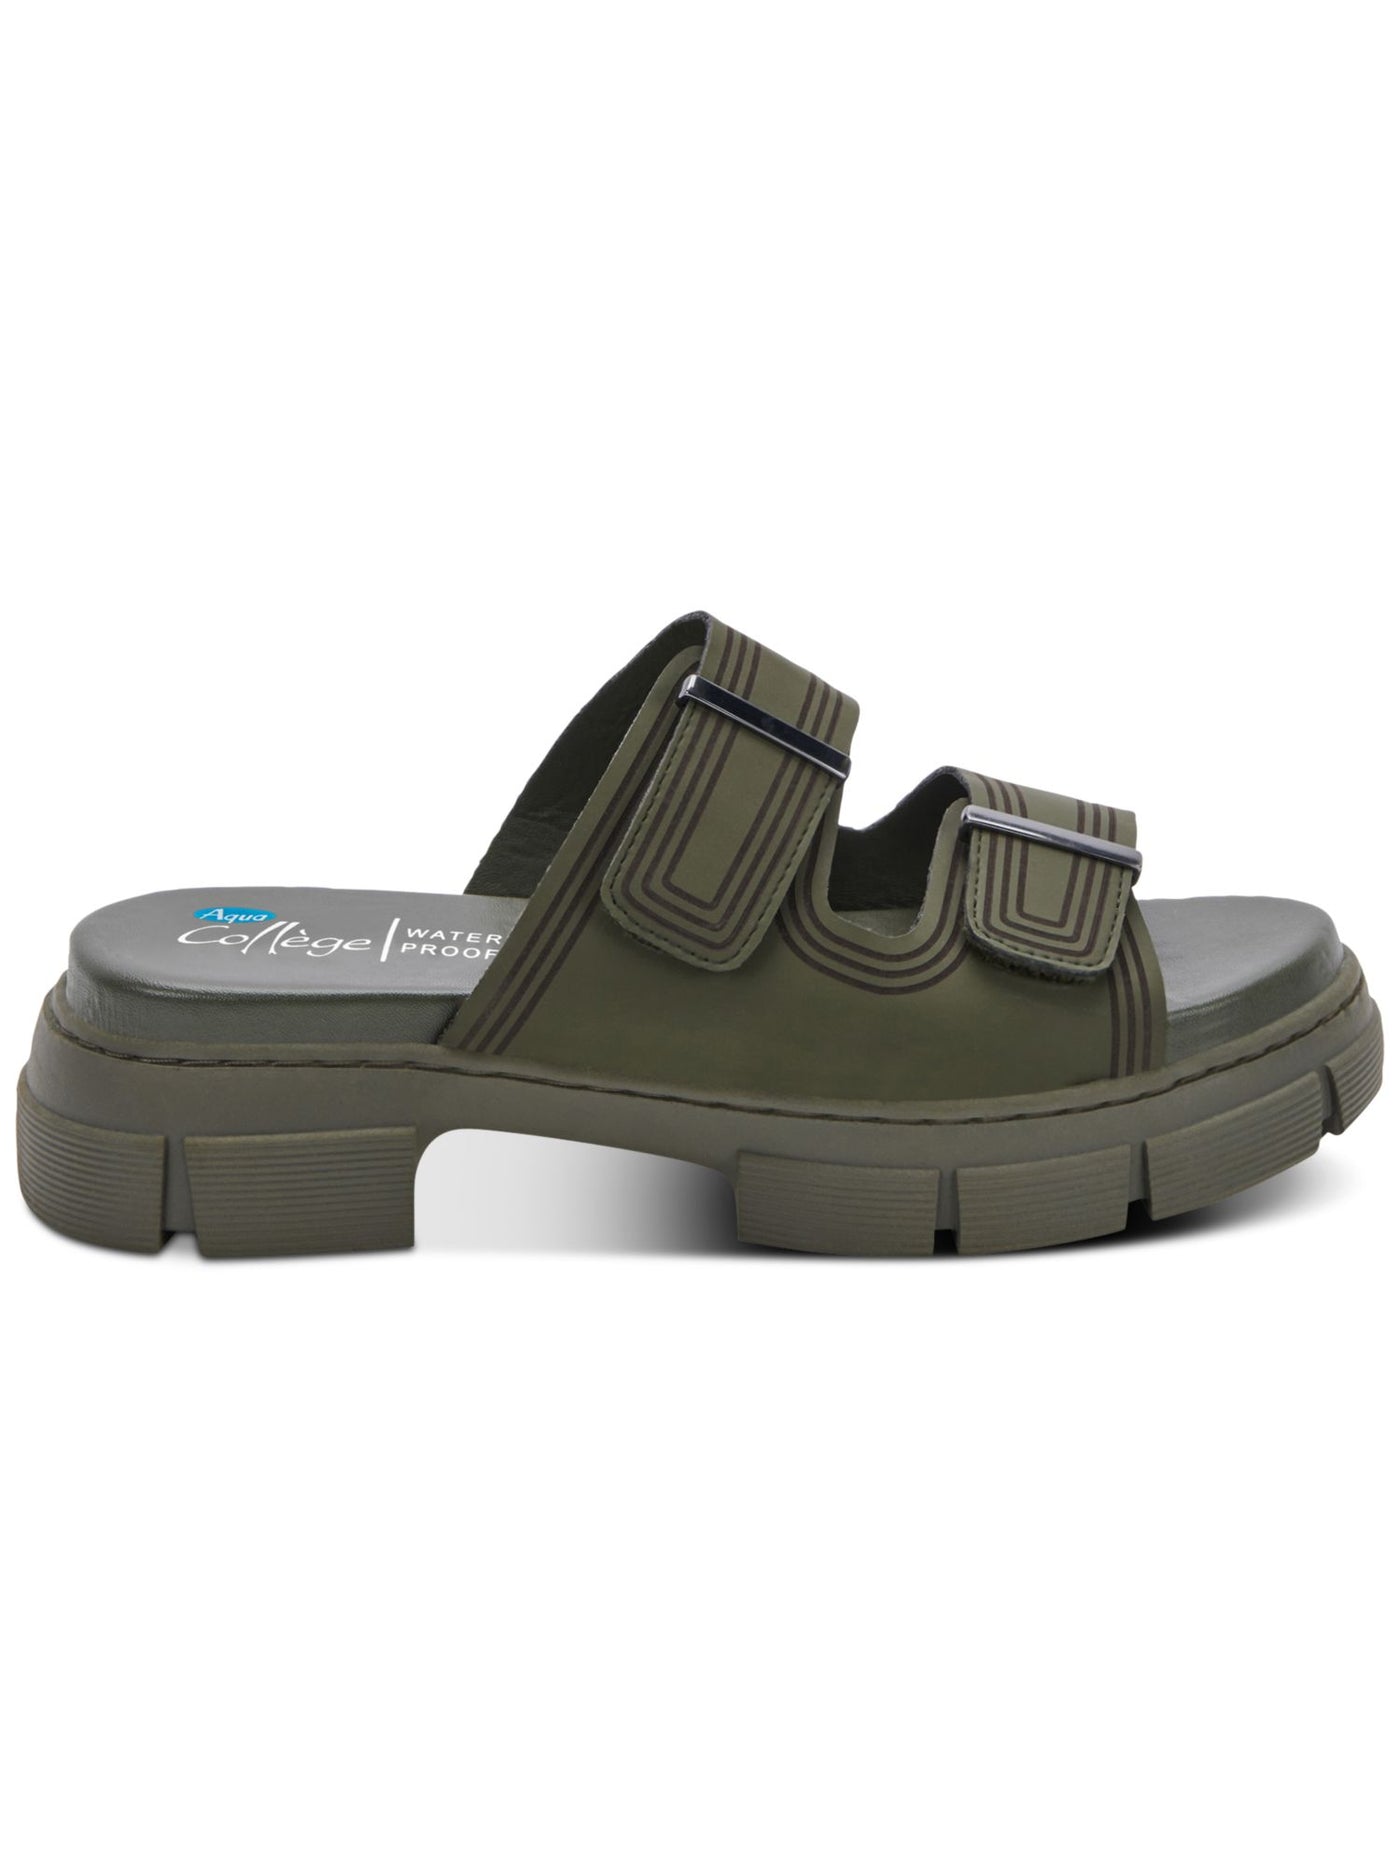 AQUA COLLEGE Womens Green Adjustable Strap Water Resistant Hippie Round Toe Block Heel Slip On Slide Sandals Shoes 7 M